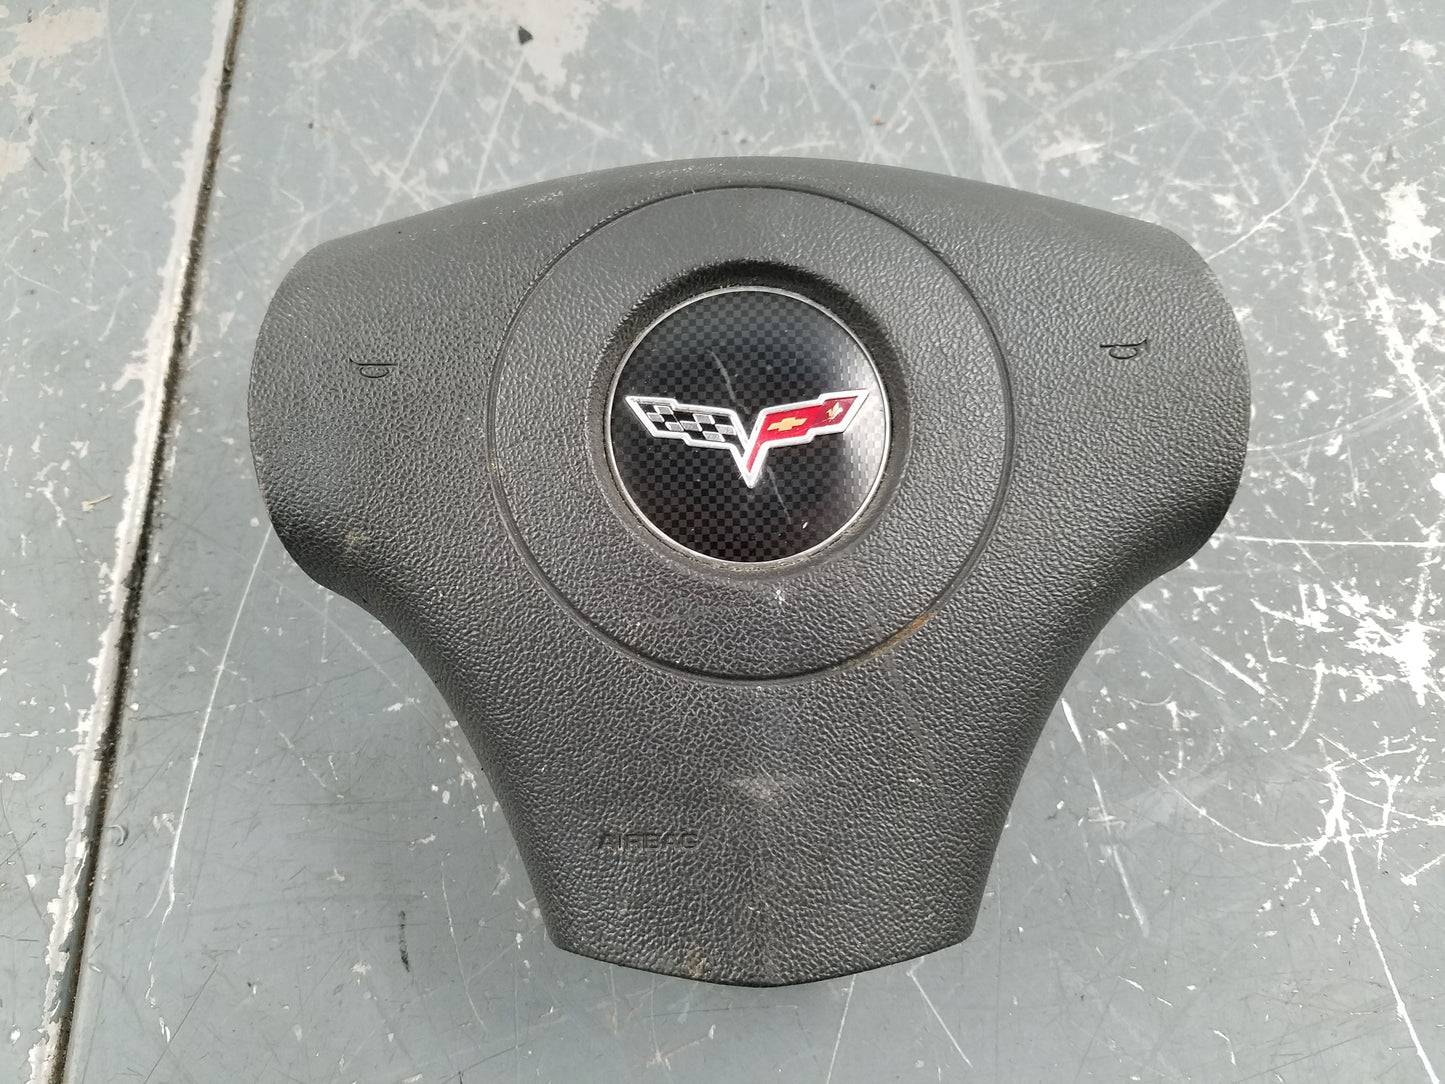 2008 Chevy Corvette C6 Steering Wheel Airbag #1159 C2